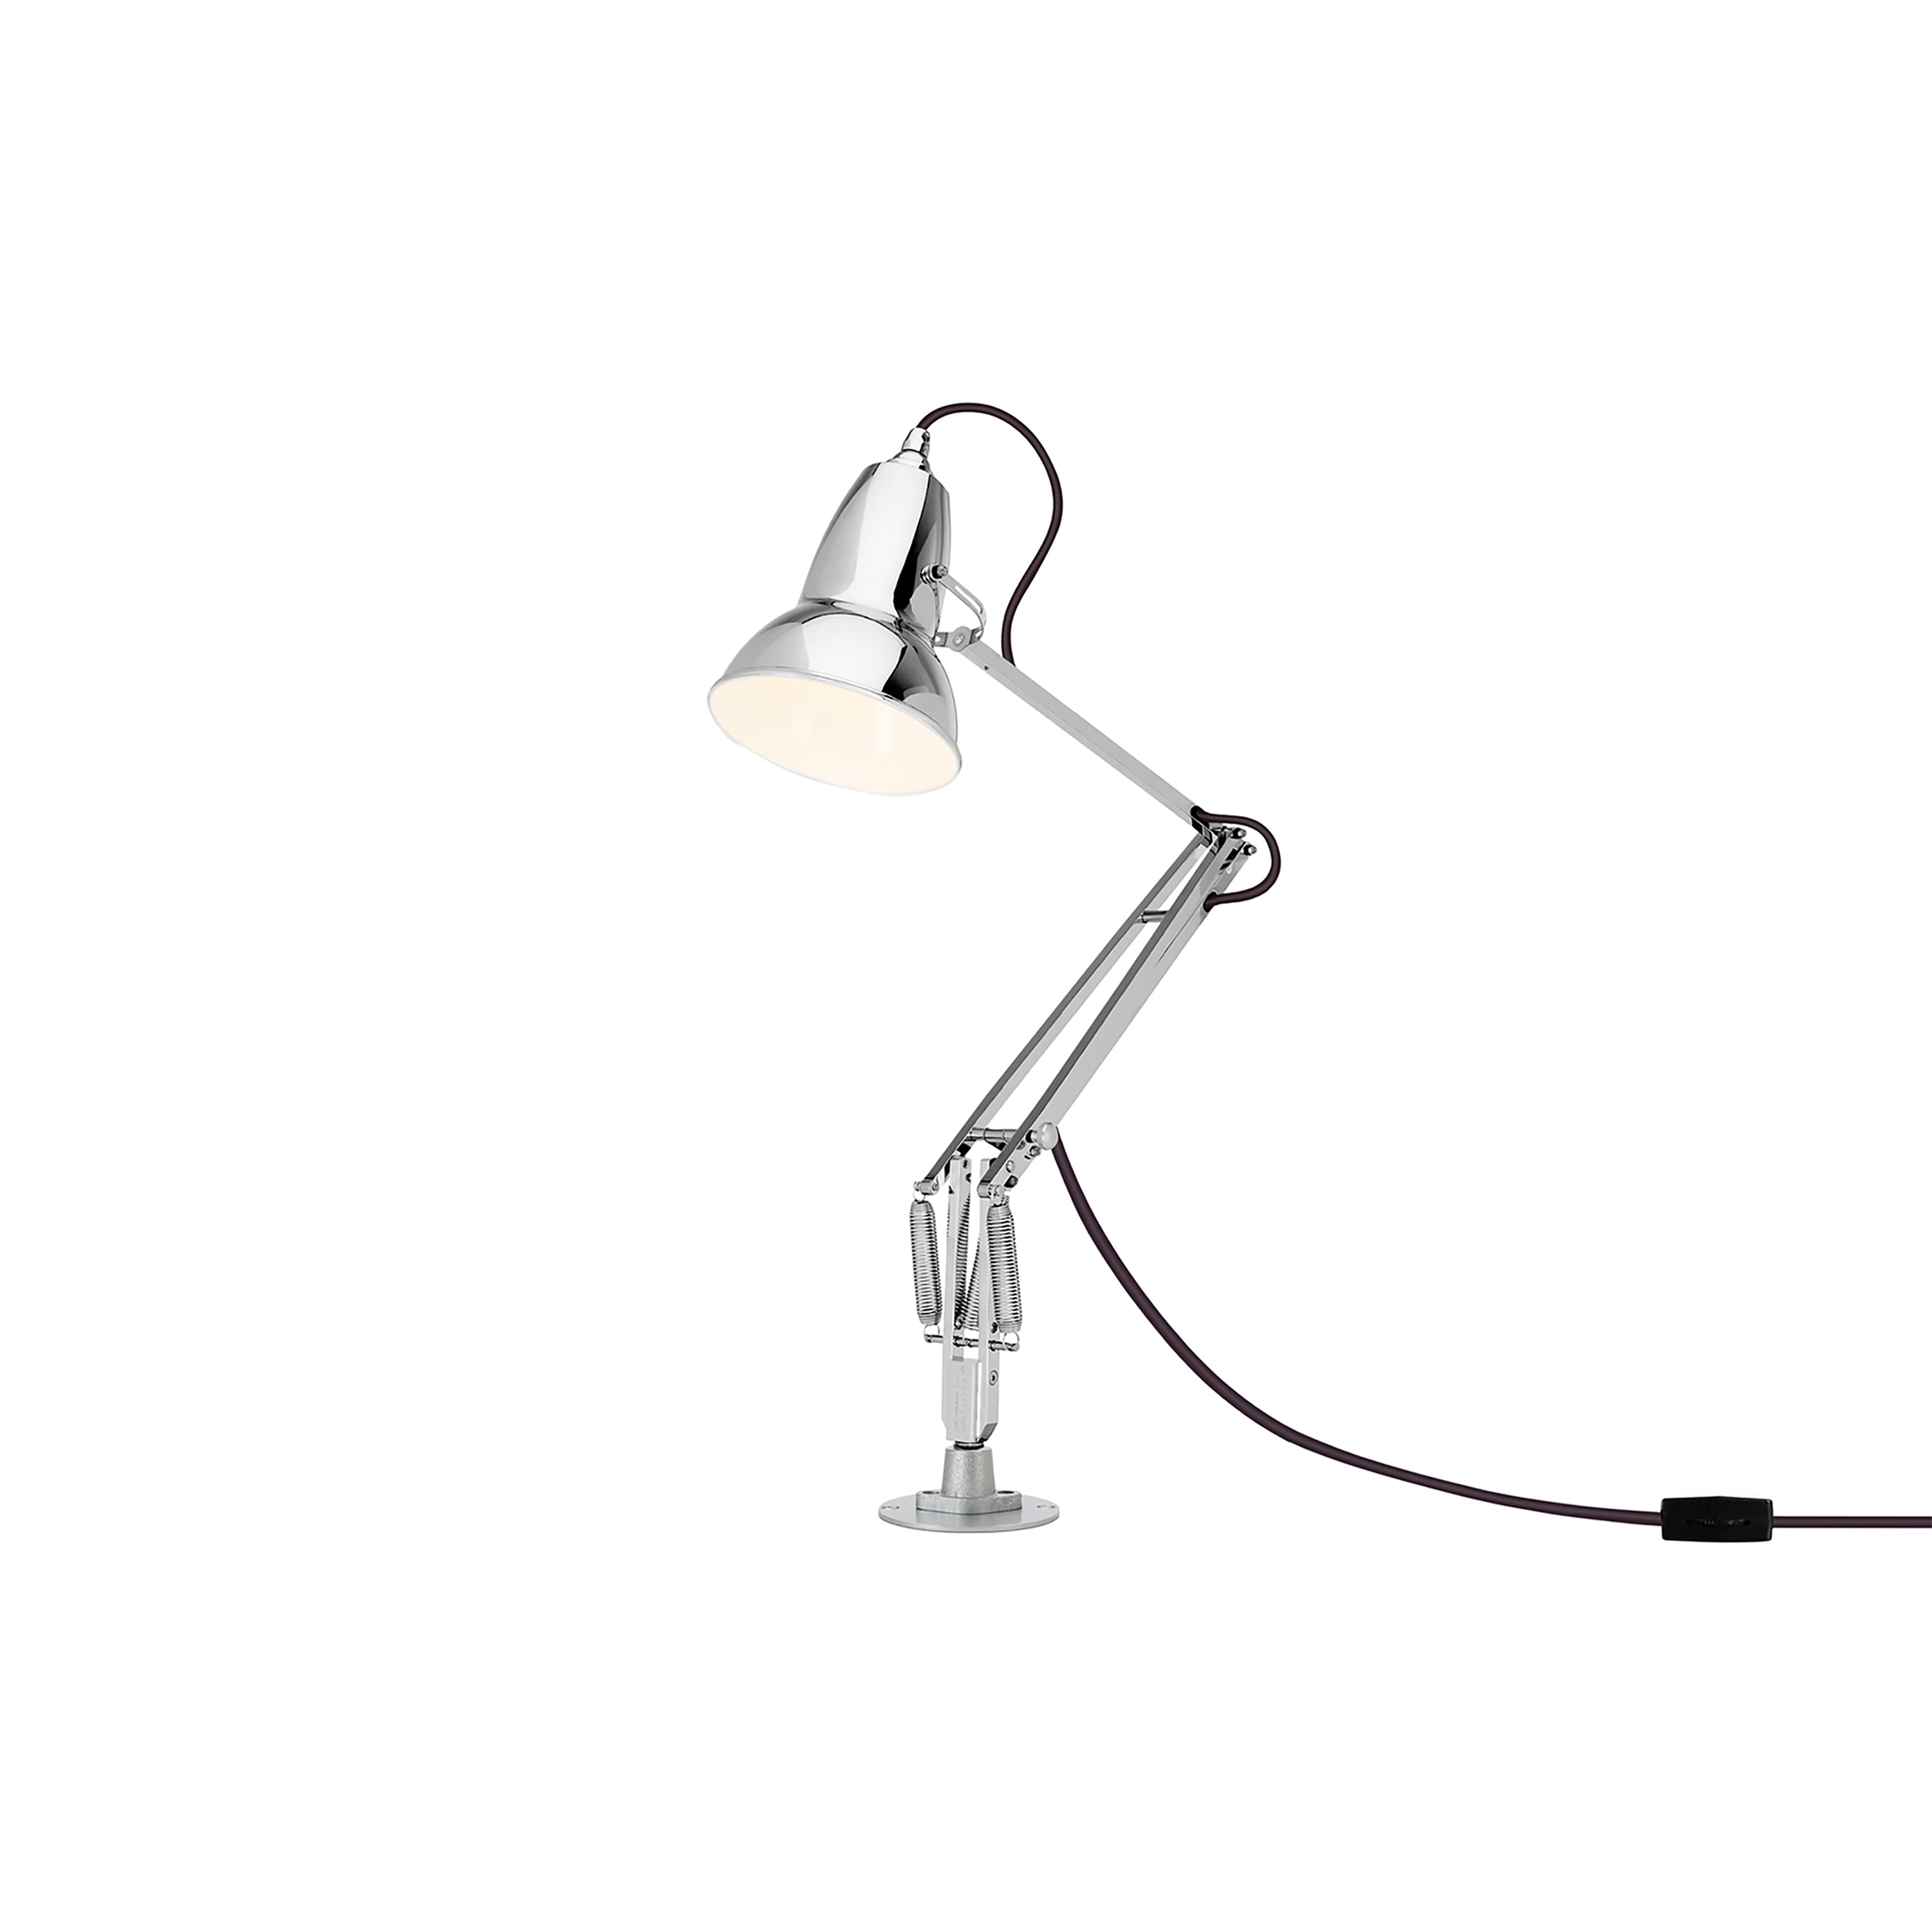 Original 1227 Desk Lamp with Insert: Bright Chrome